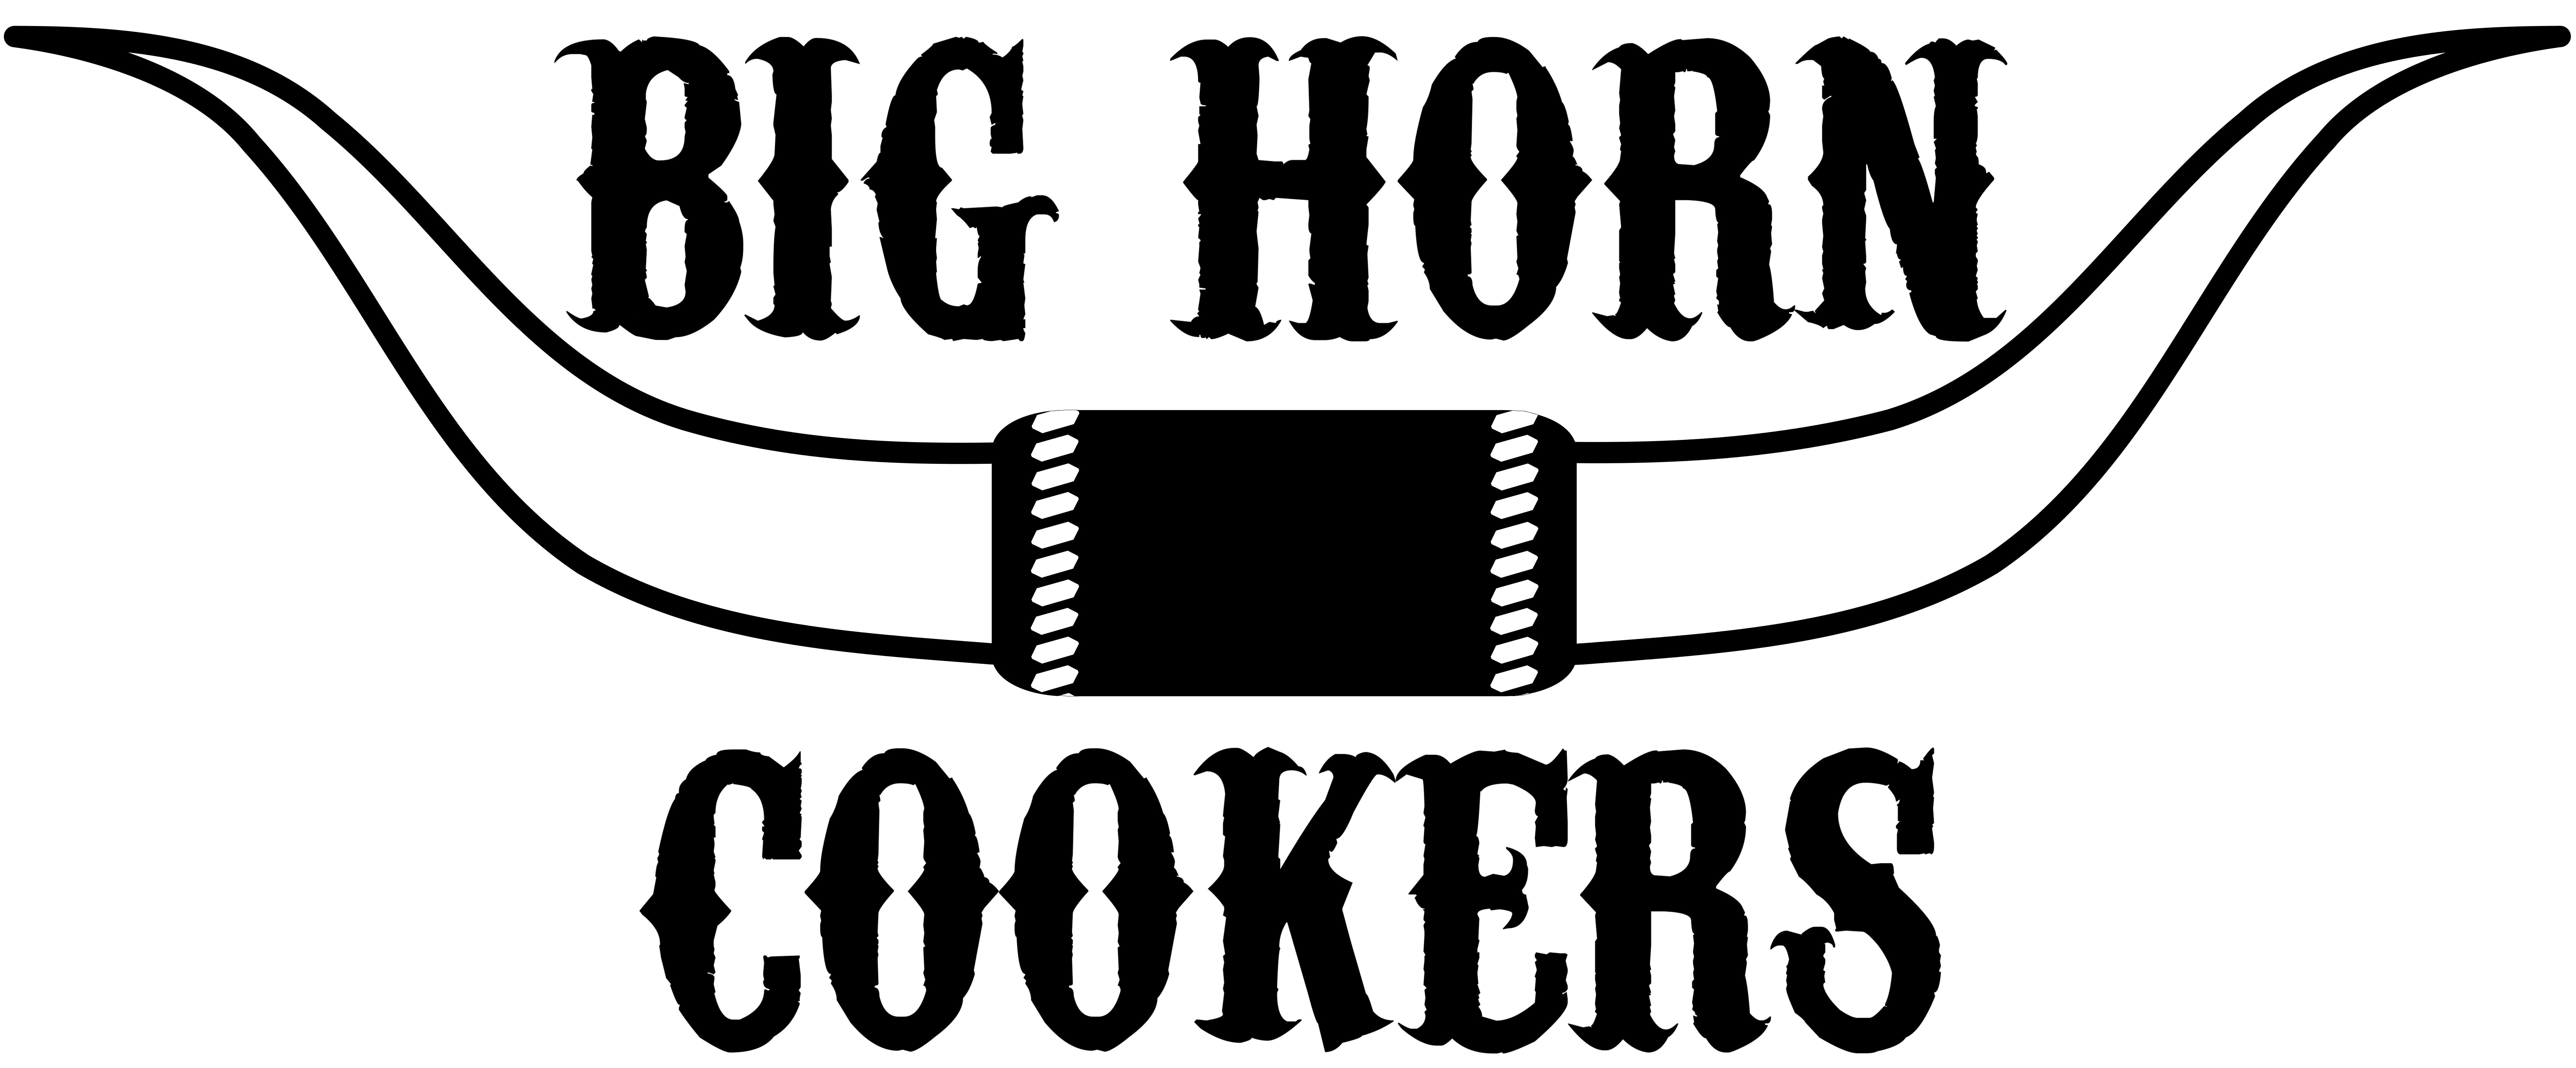 BIG HORN COOKERS